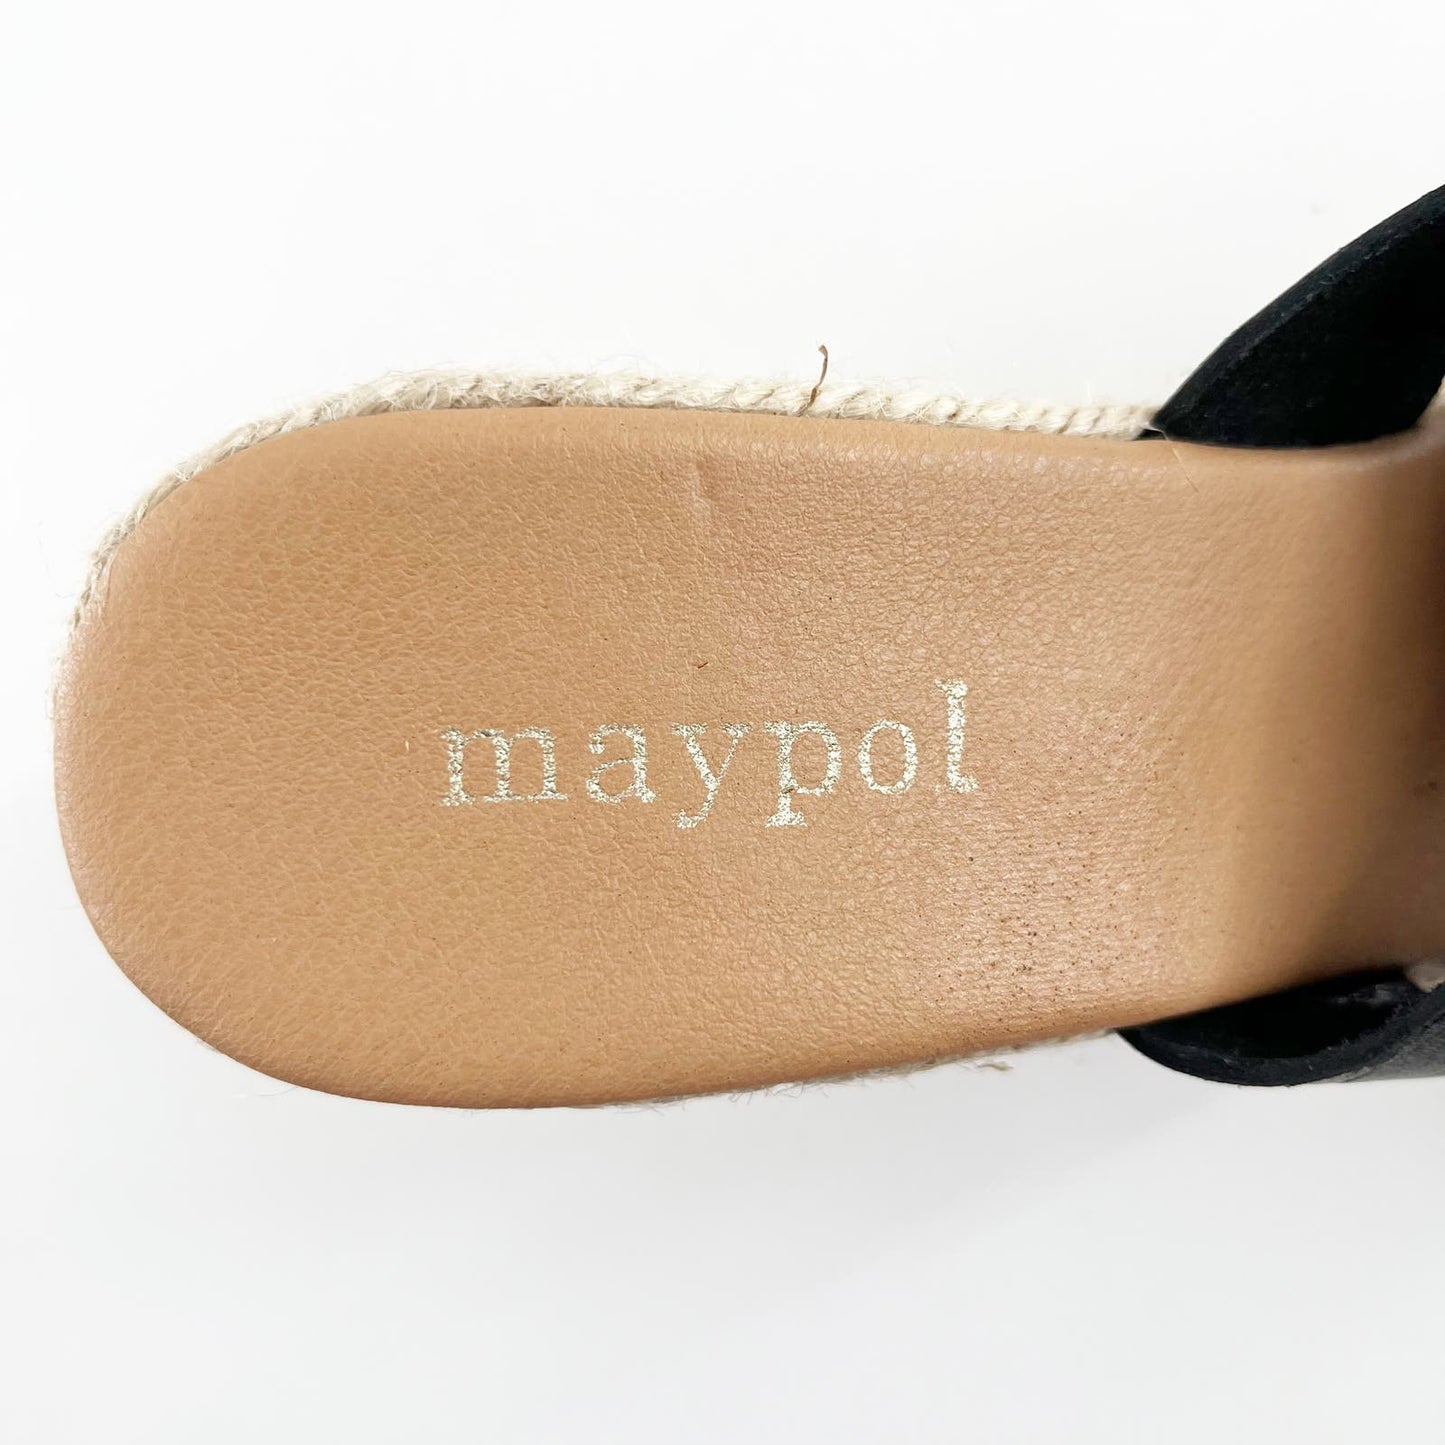 Maypol Anthropologie Studded Leather Espadrille Wedge Sandals Black 10